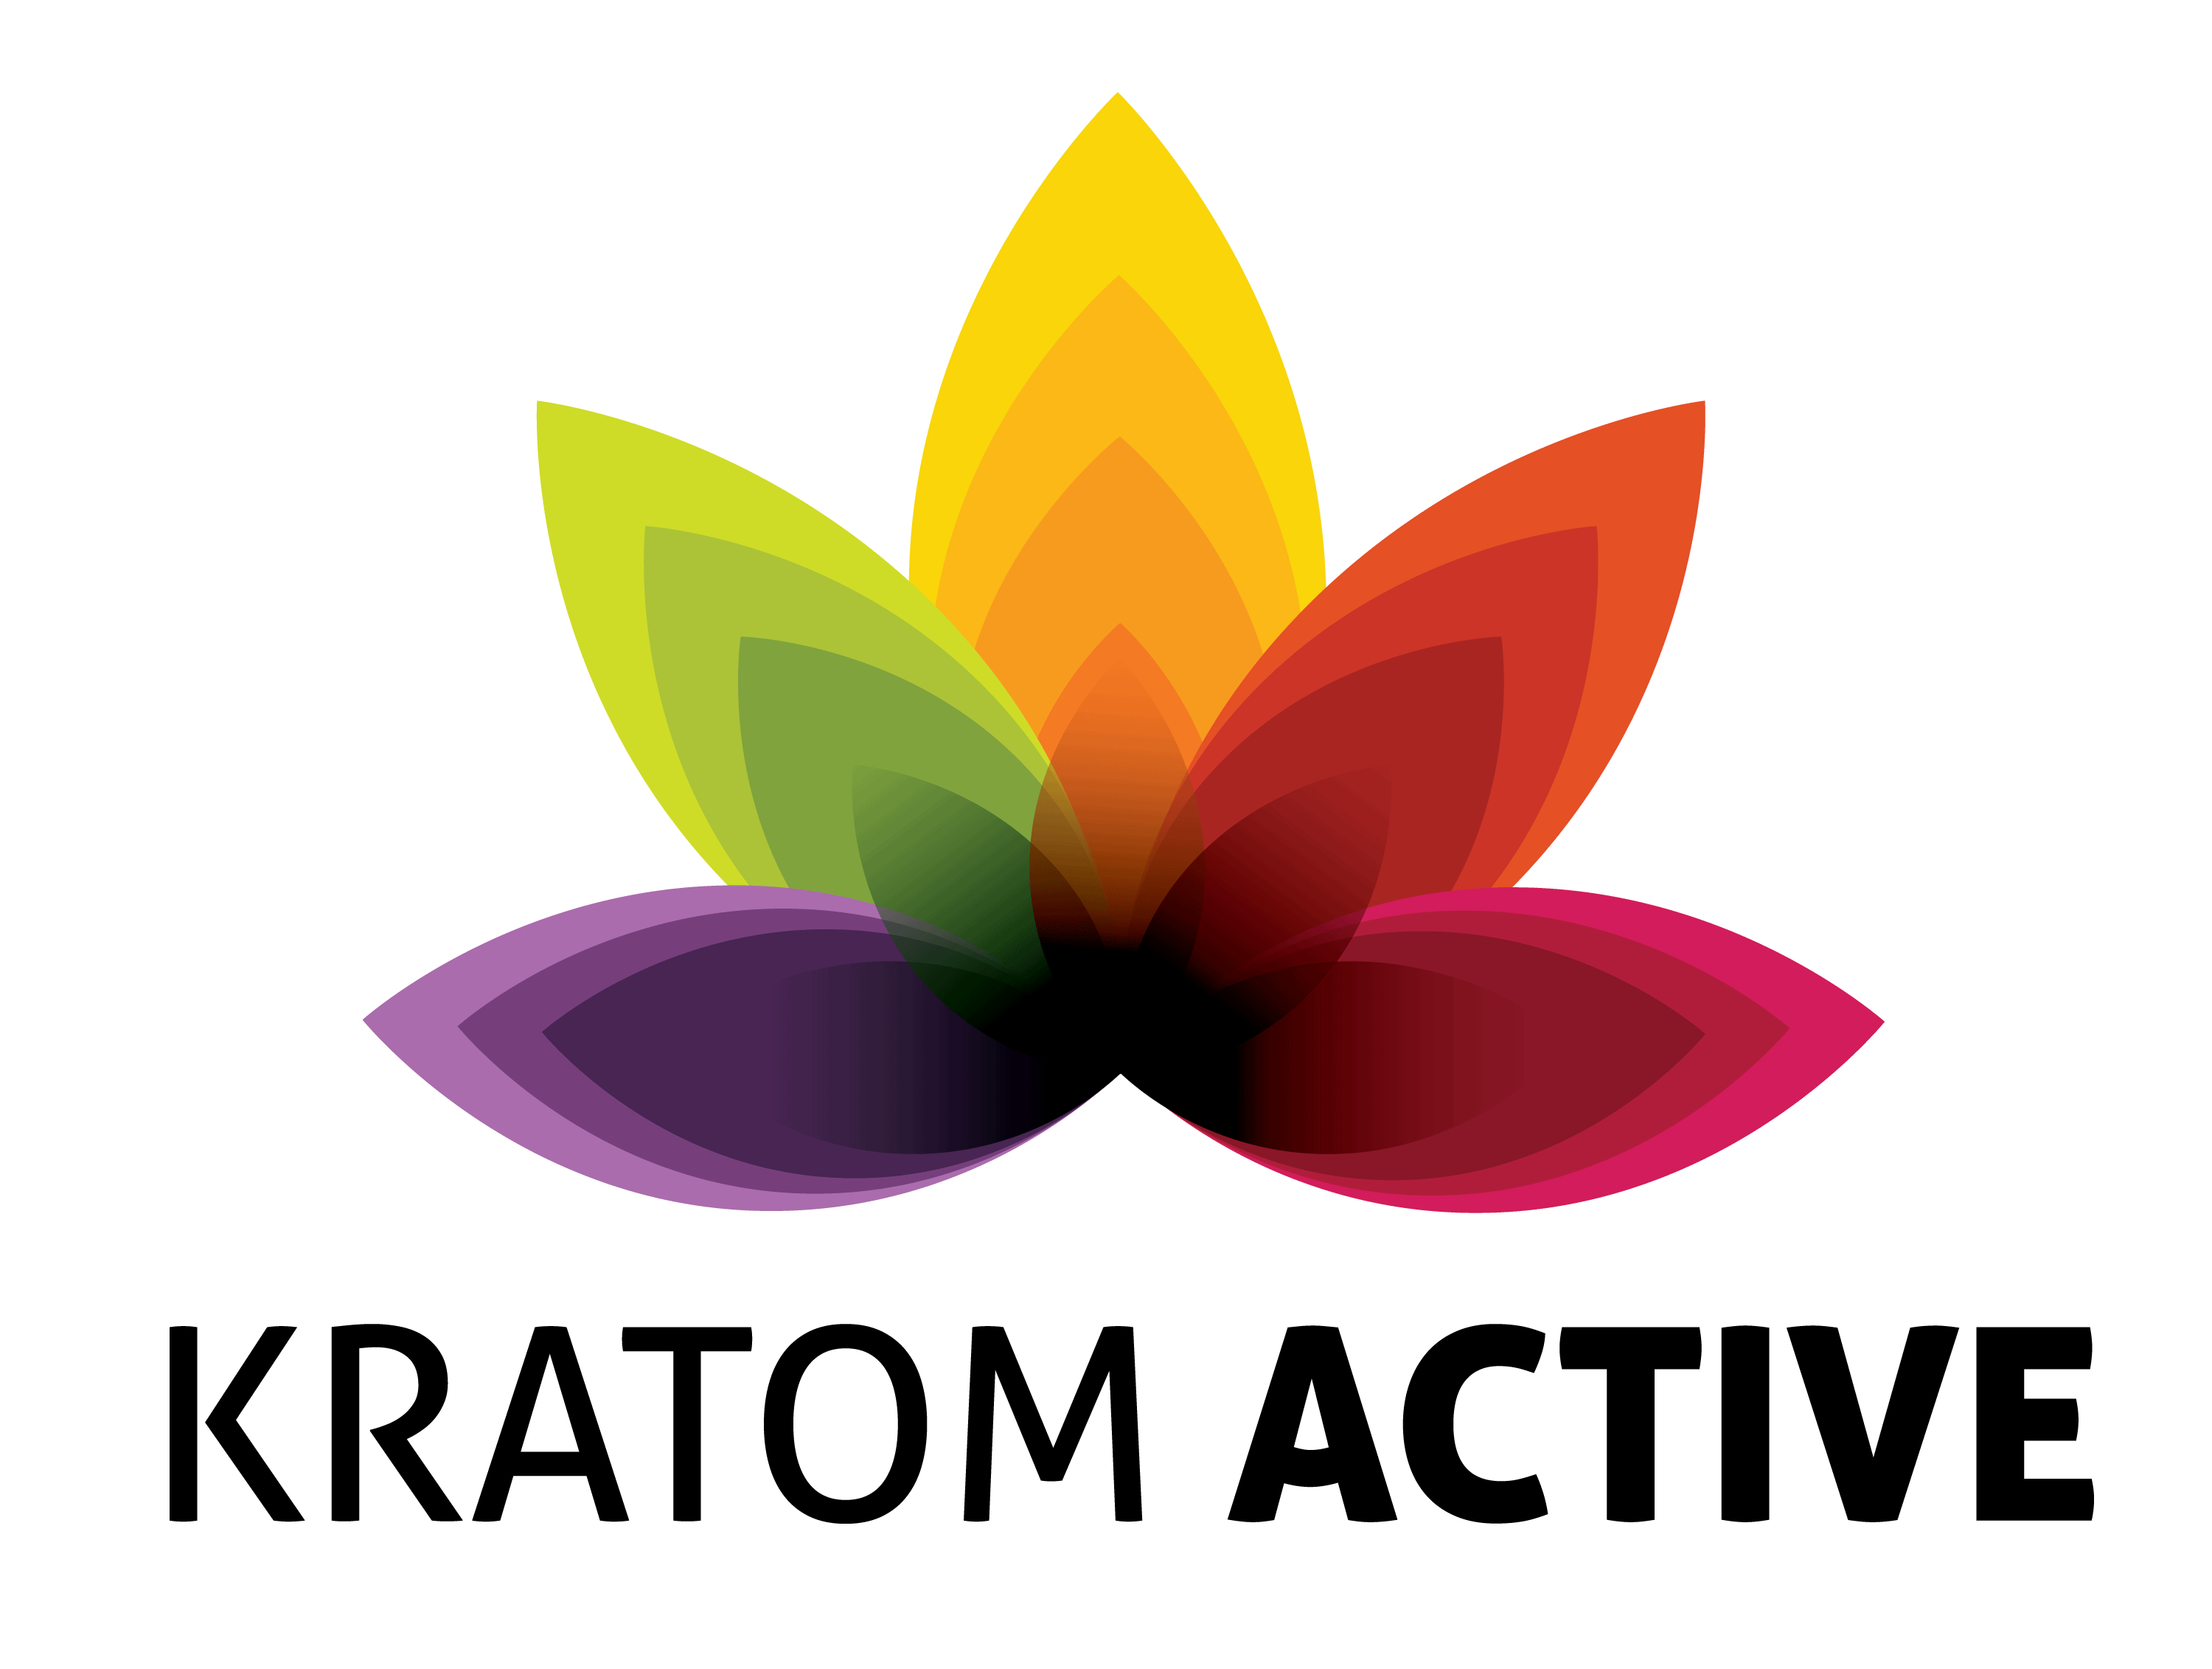 Remote Freelance Writer Needed at Kratom Active